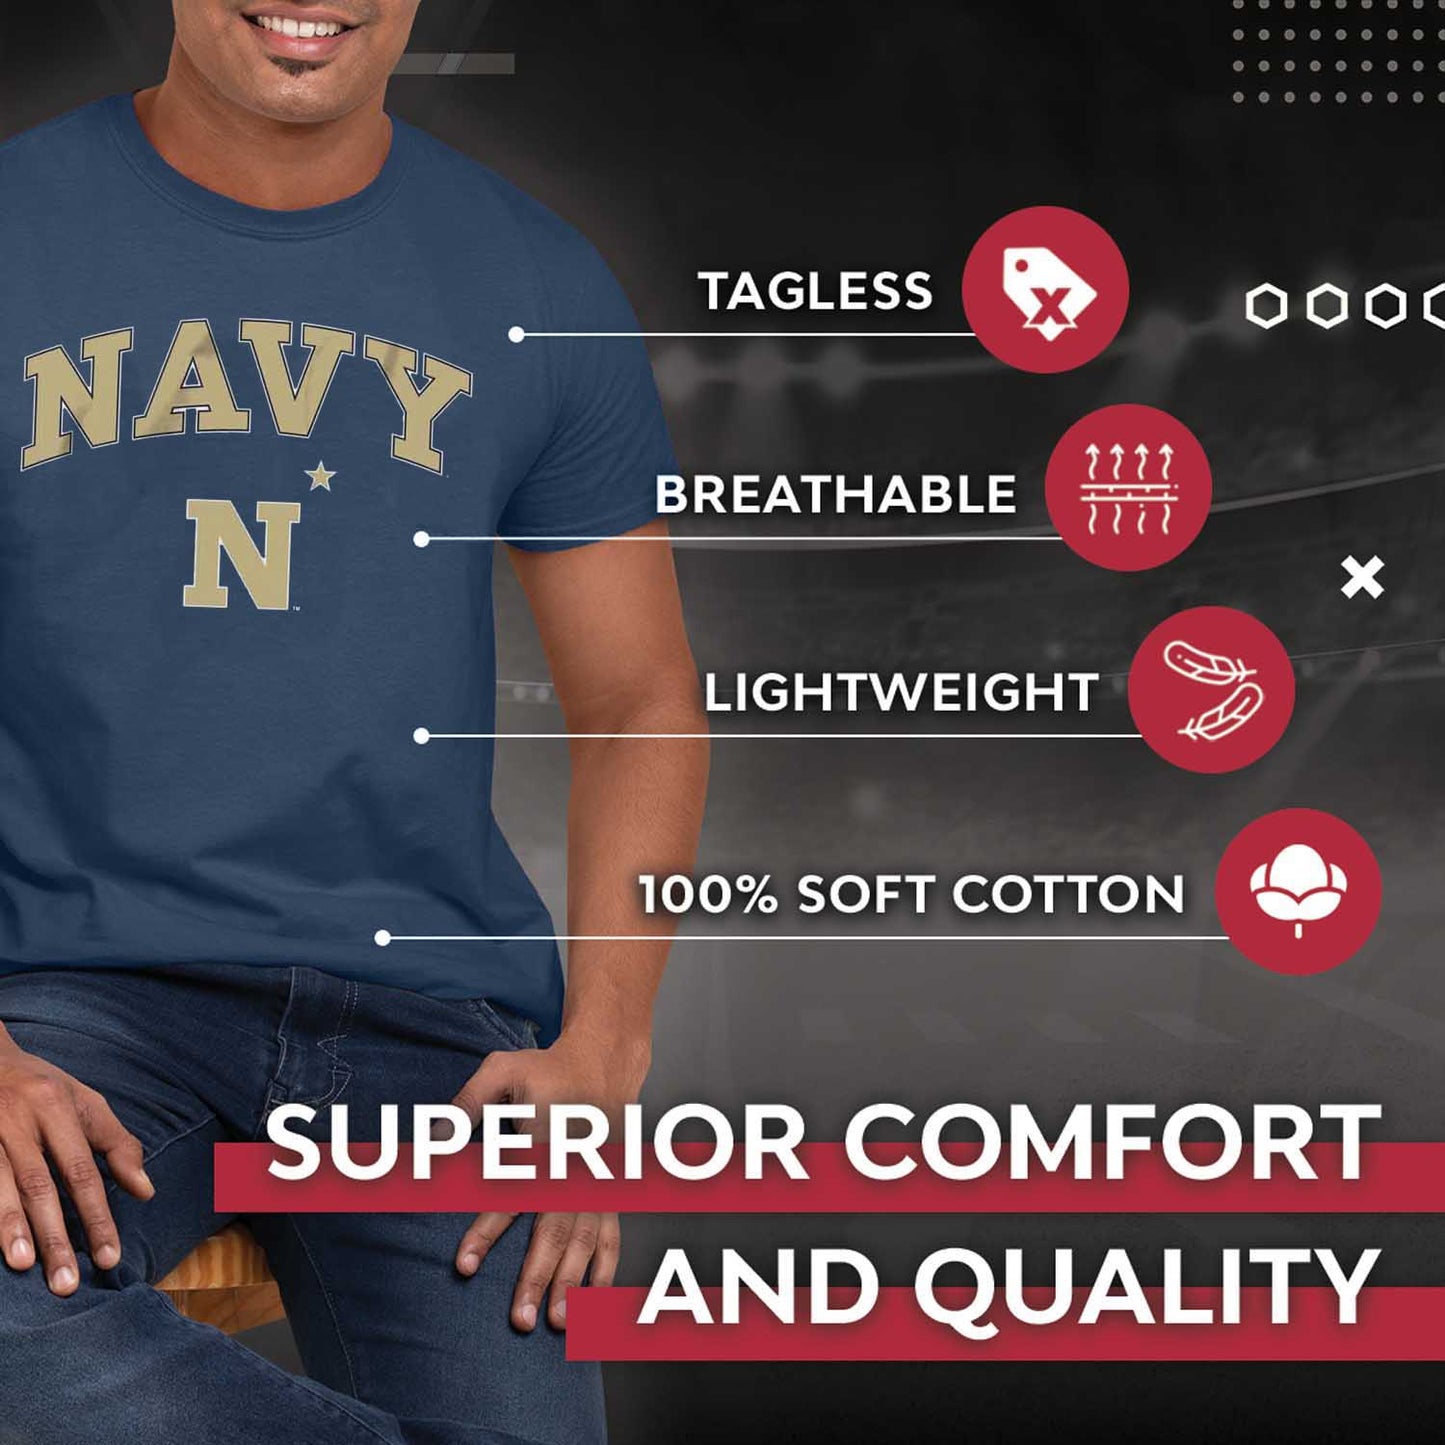 Navy Midshipmen NCAA Adult Gameday Cotton T-Shirt - Navy